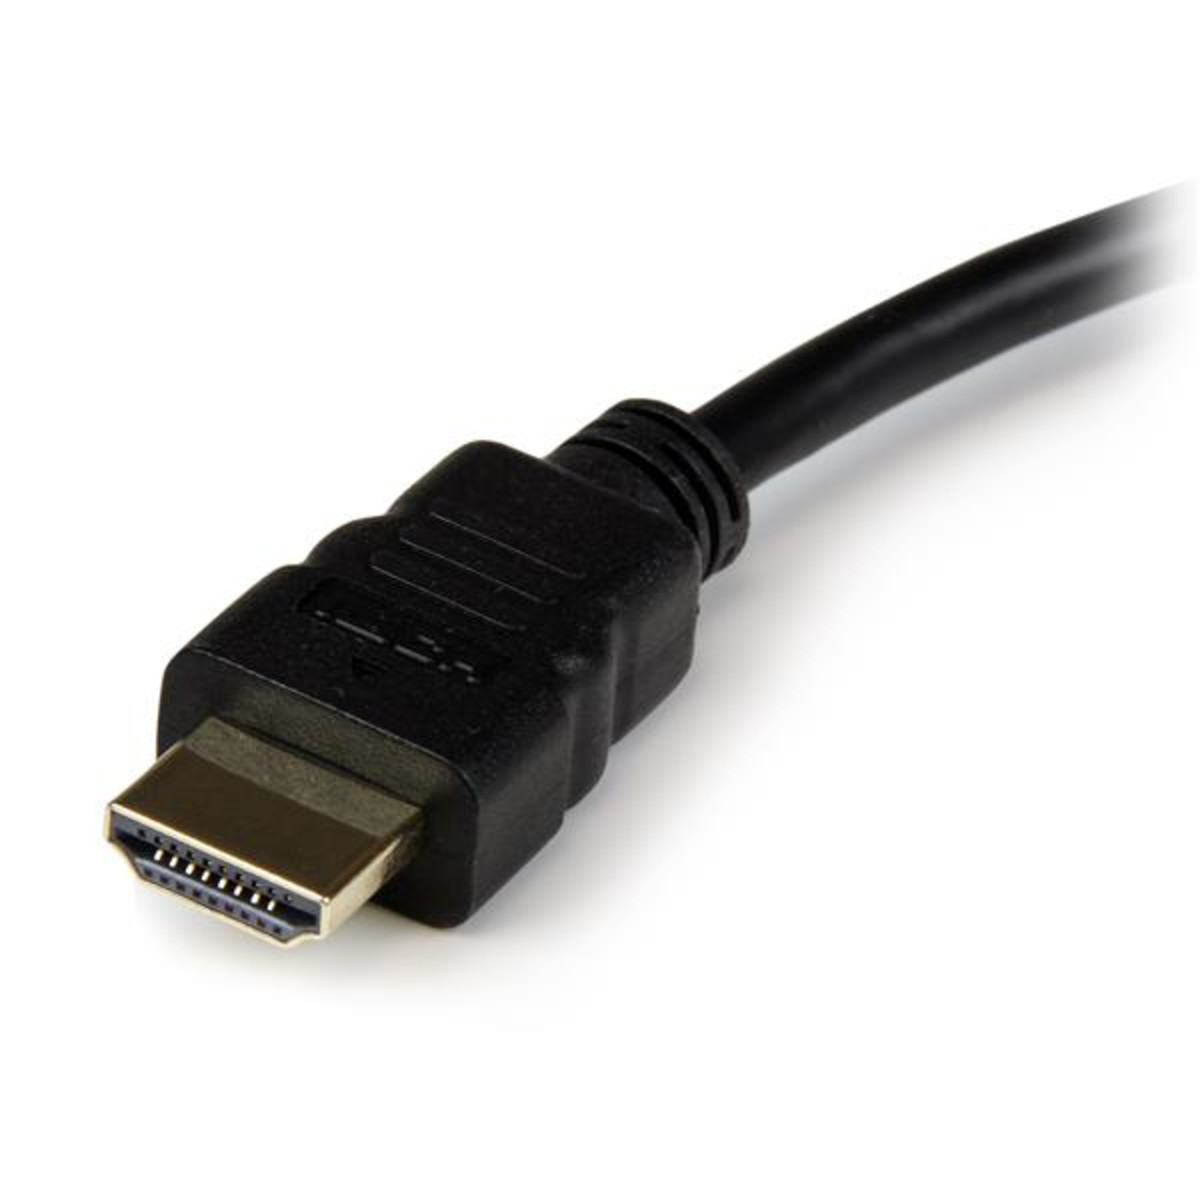 HDMI-VGA Adapter Converter